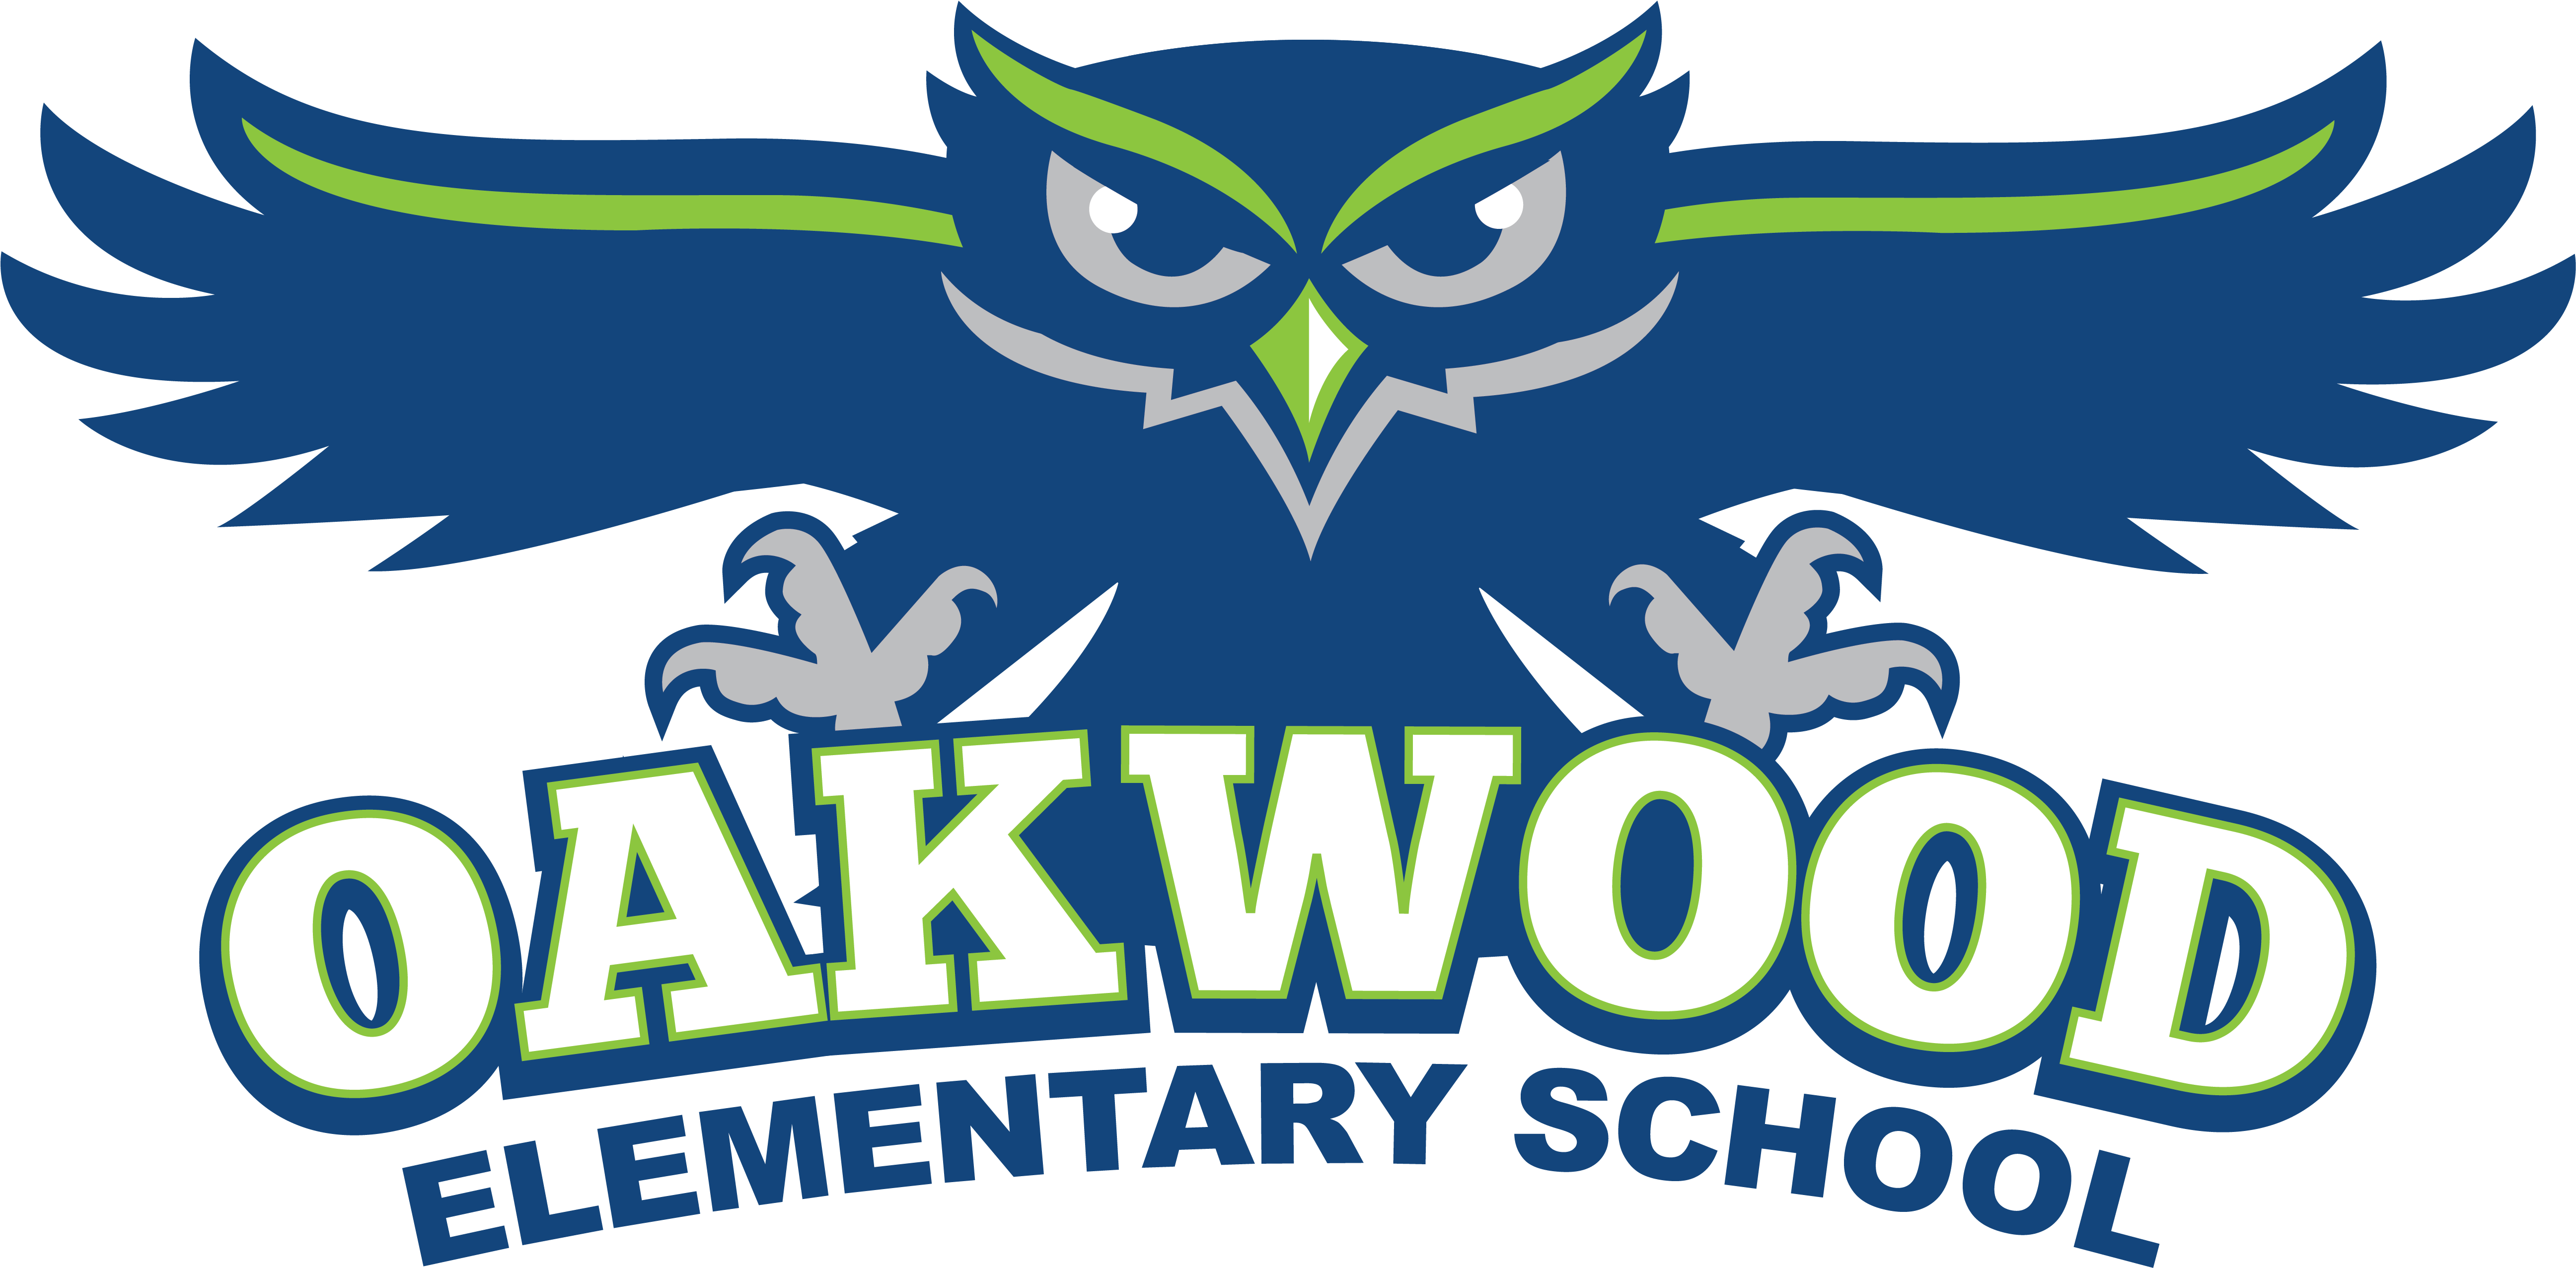 Contact Us - Owl School Logo (6508x2992)